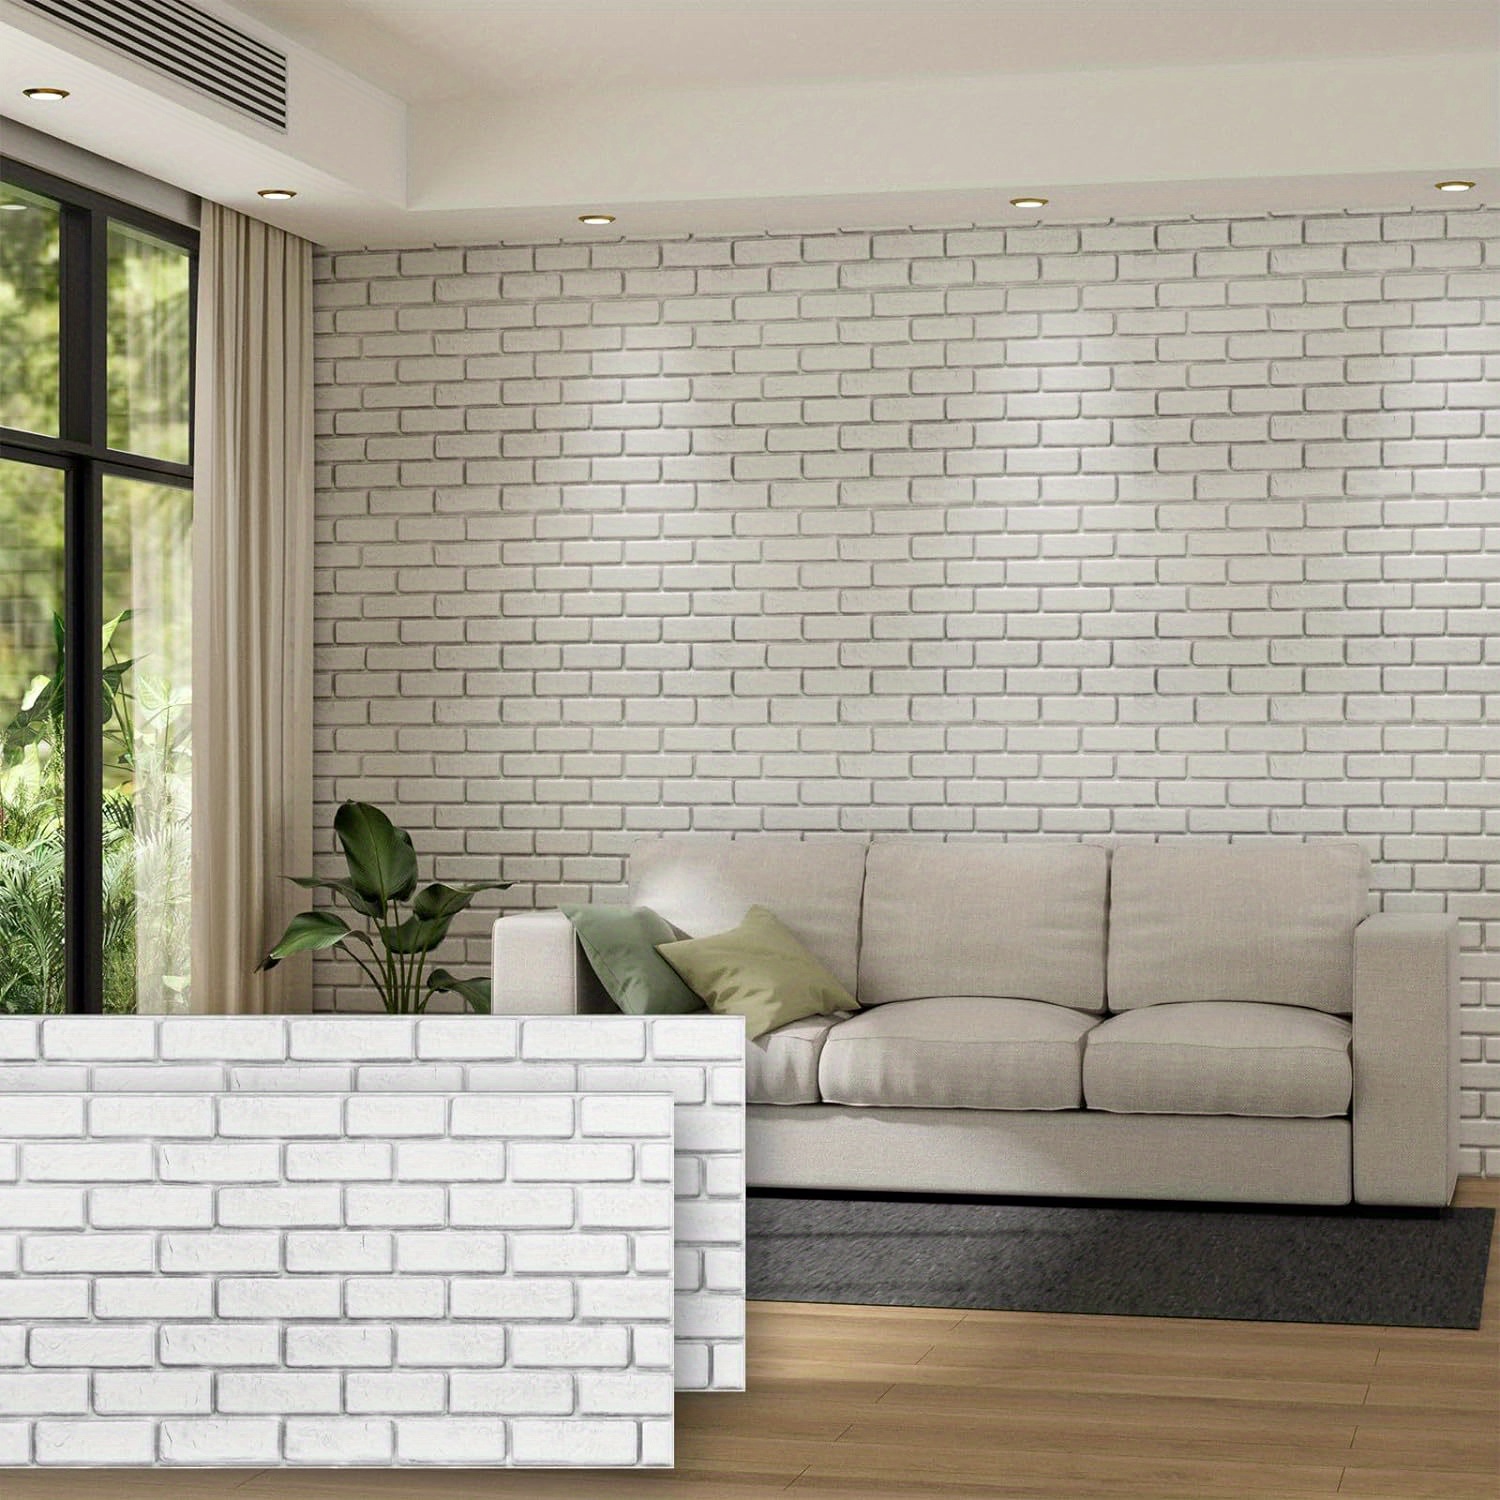 

10pcs 3d Wall Panels, 38" X 19" Brick Wall Panels Peel And Stick 3d Brick Wallpaper, Self Adhesive Pvc Faux Brick Paneling For Bedroom, Bathroom, Kitchen, Fireplace